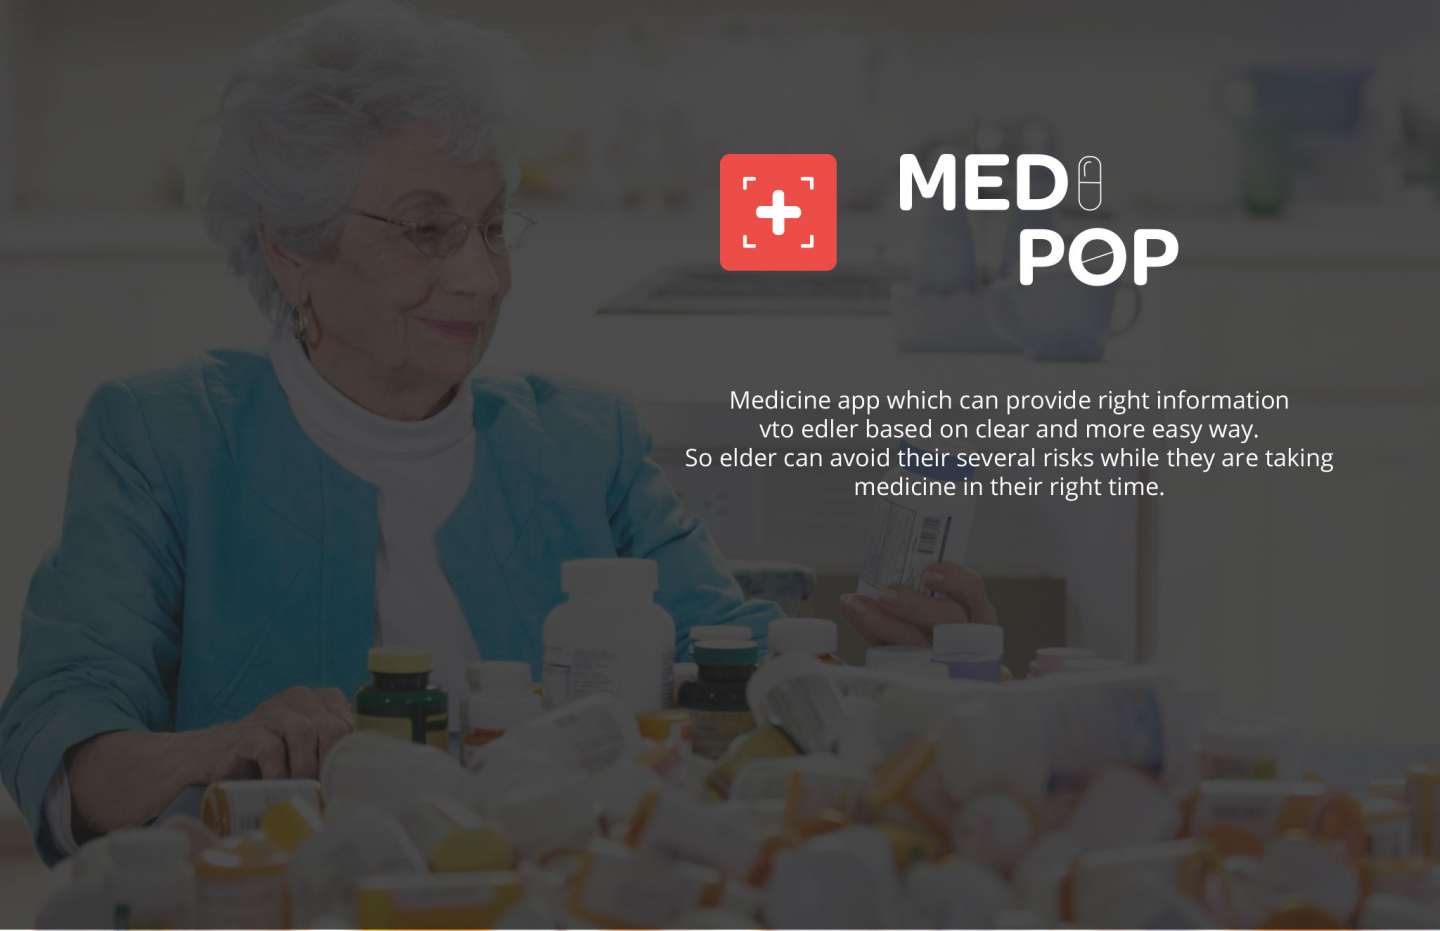 Medi pop App